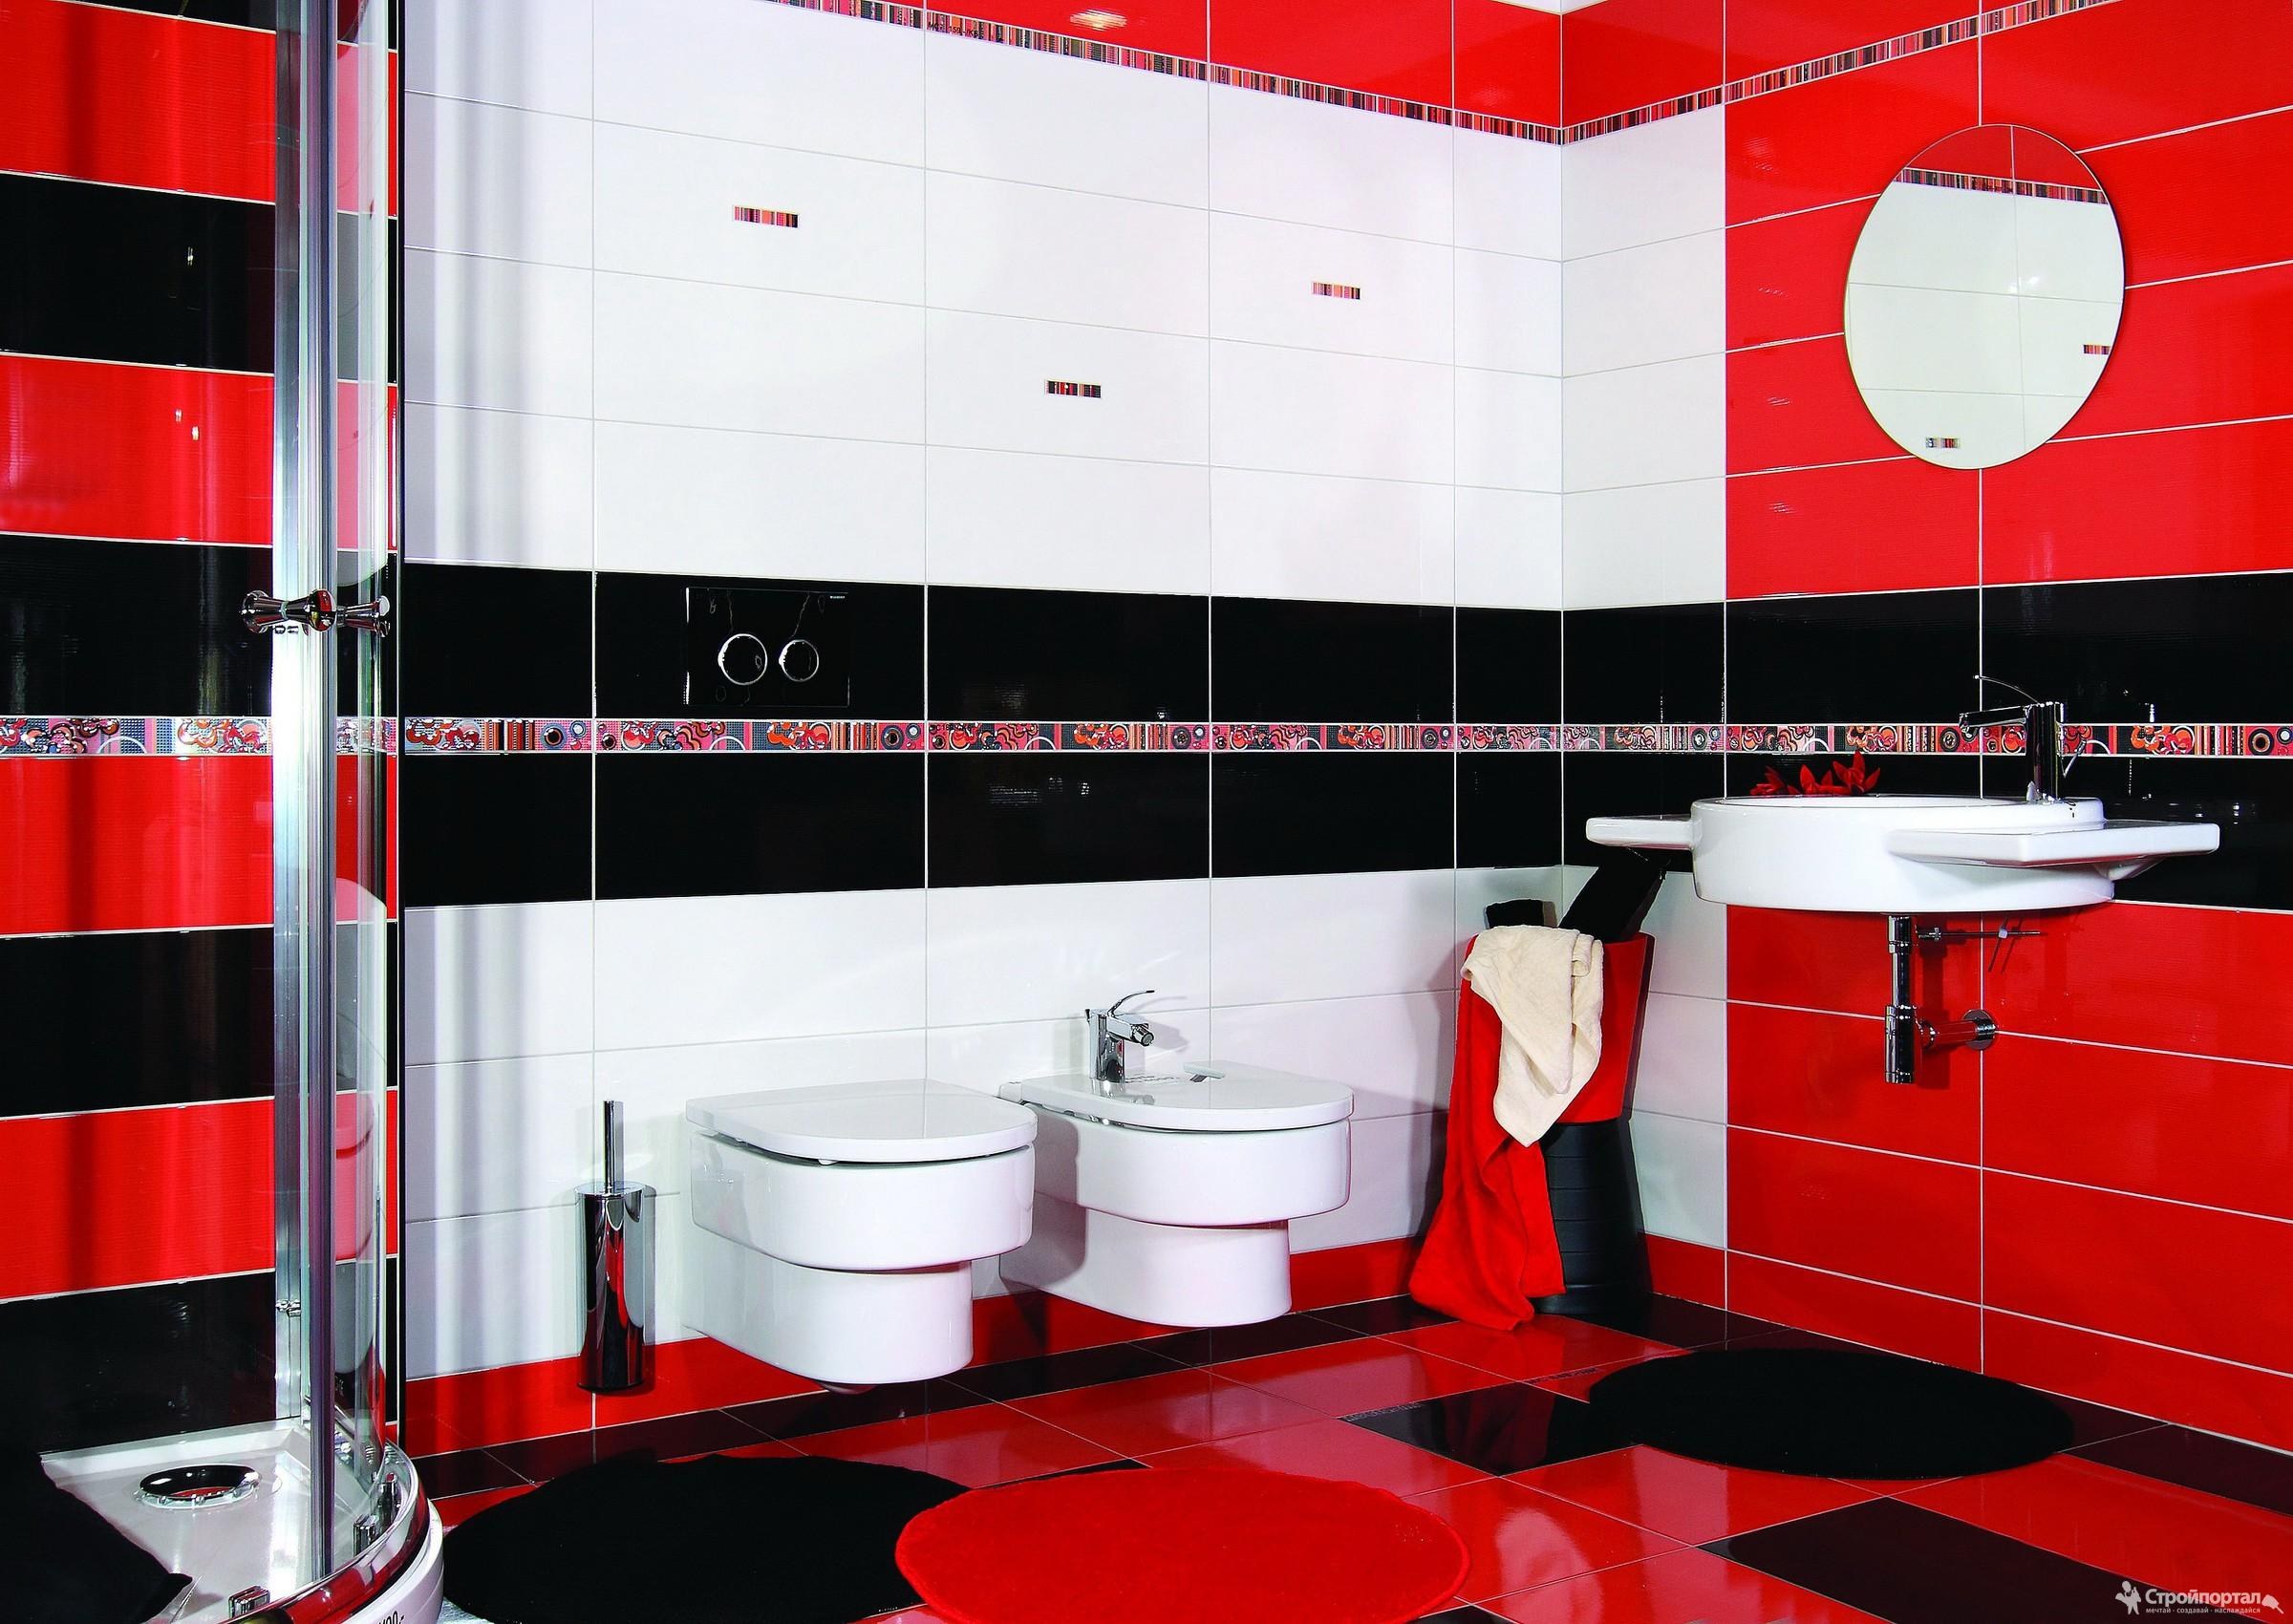 Красная плитка в ванной plitka vanny ru. Красно белая ванная комната. Красно черная ванная. Черно красная плитка в ванной. Черно красная ванная комната.